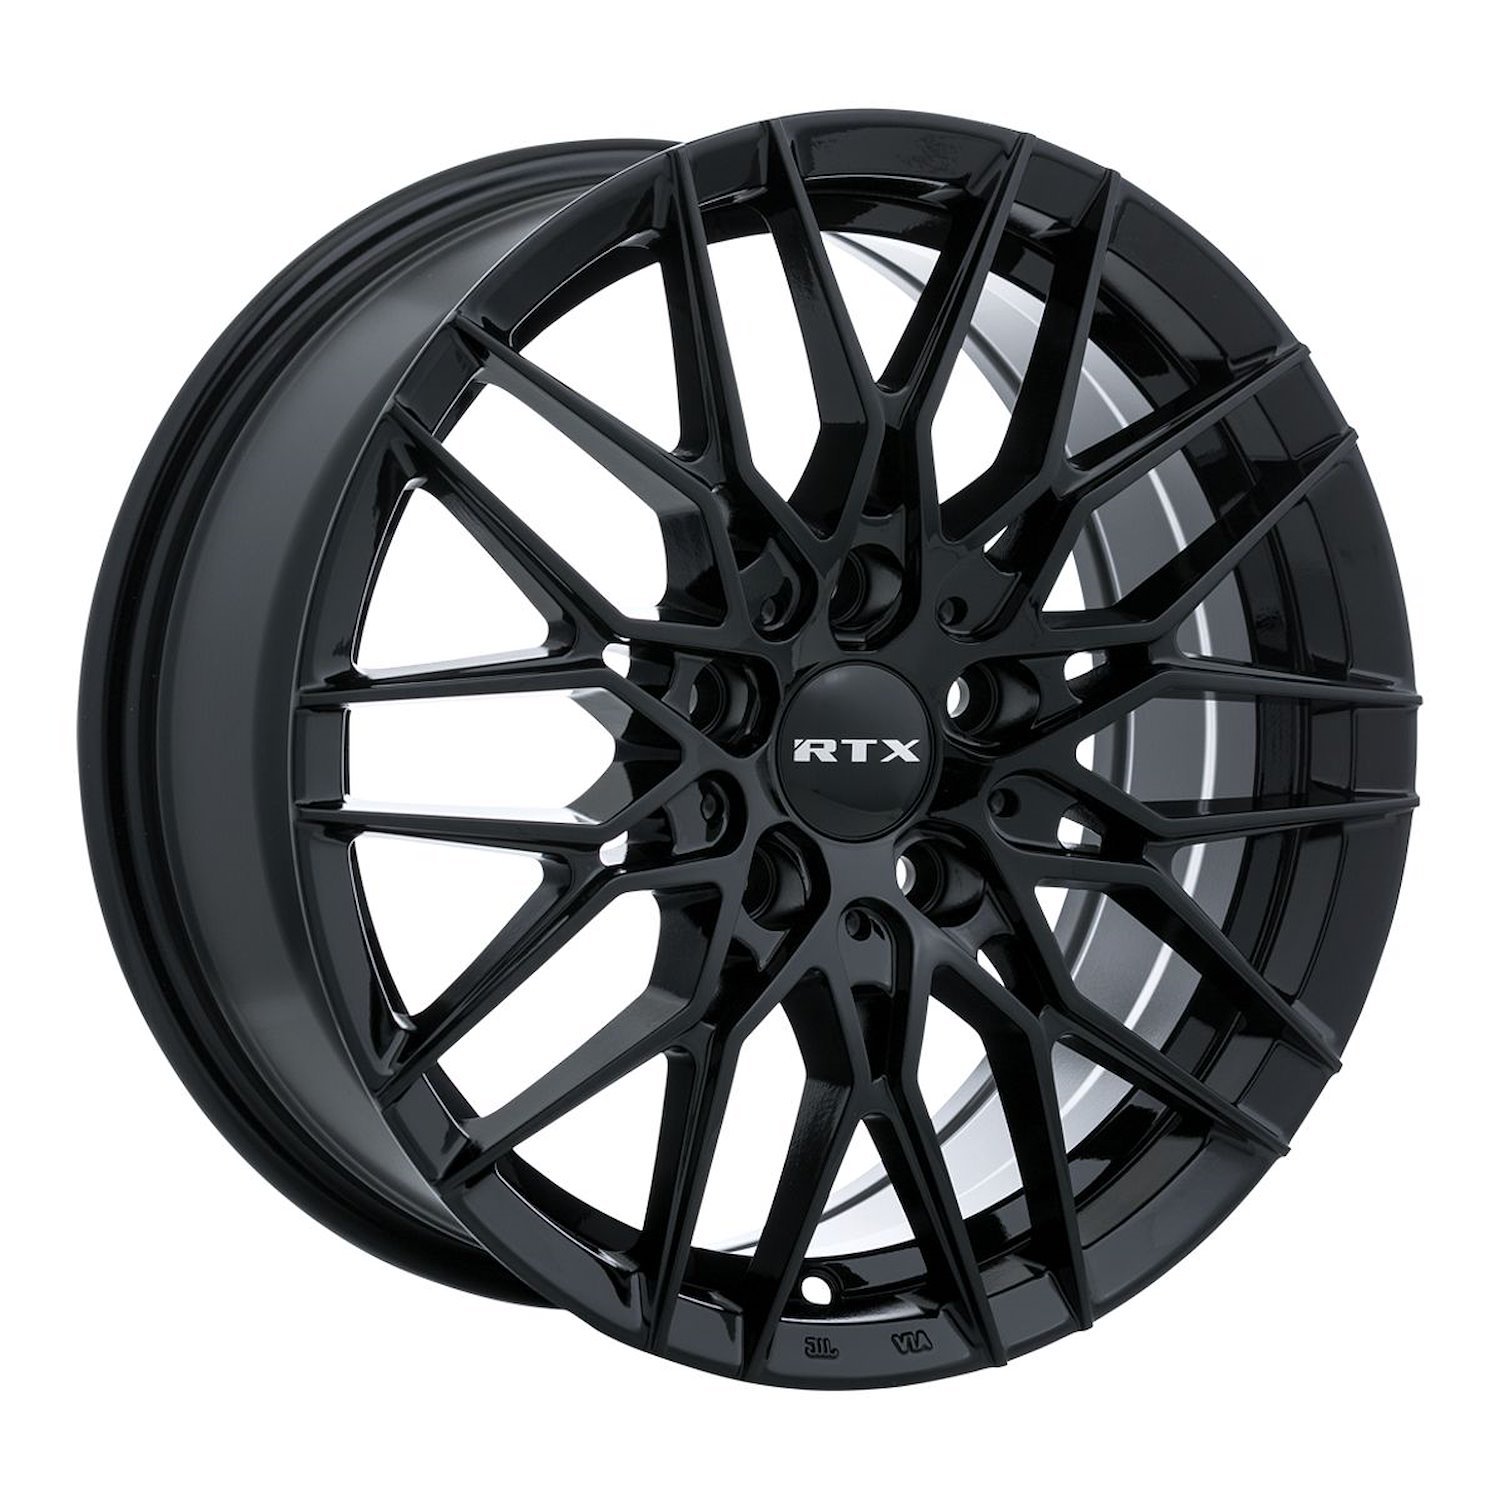 082937 RTX-Series V20 Wheel [Size: 16" x 7"] Gloss Black Finish